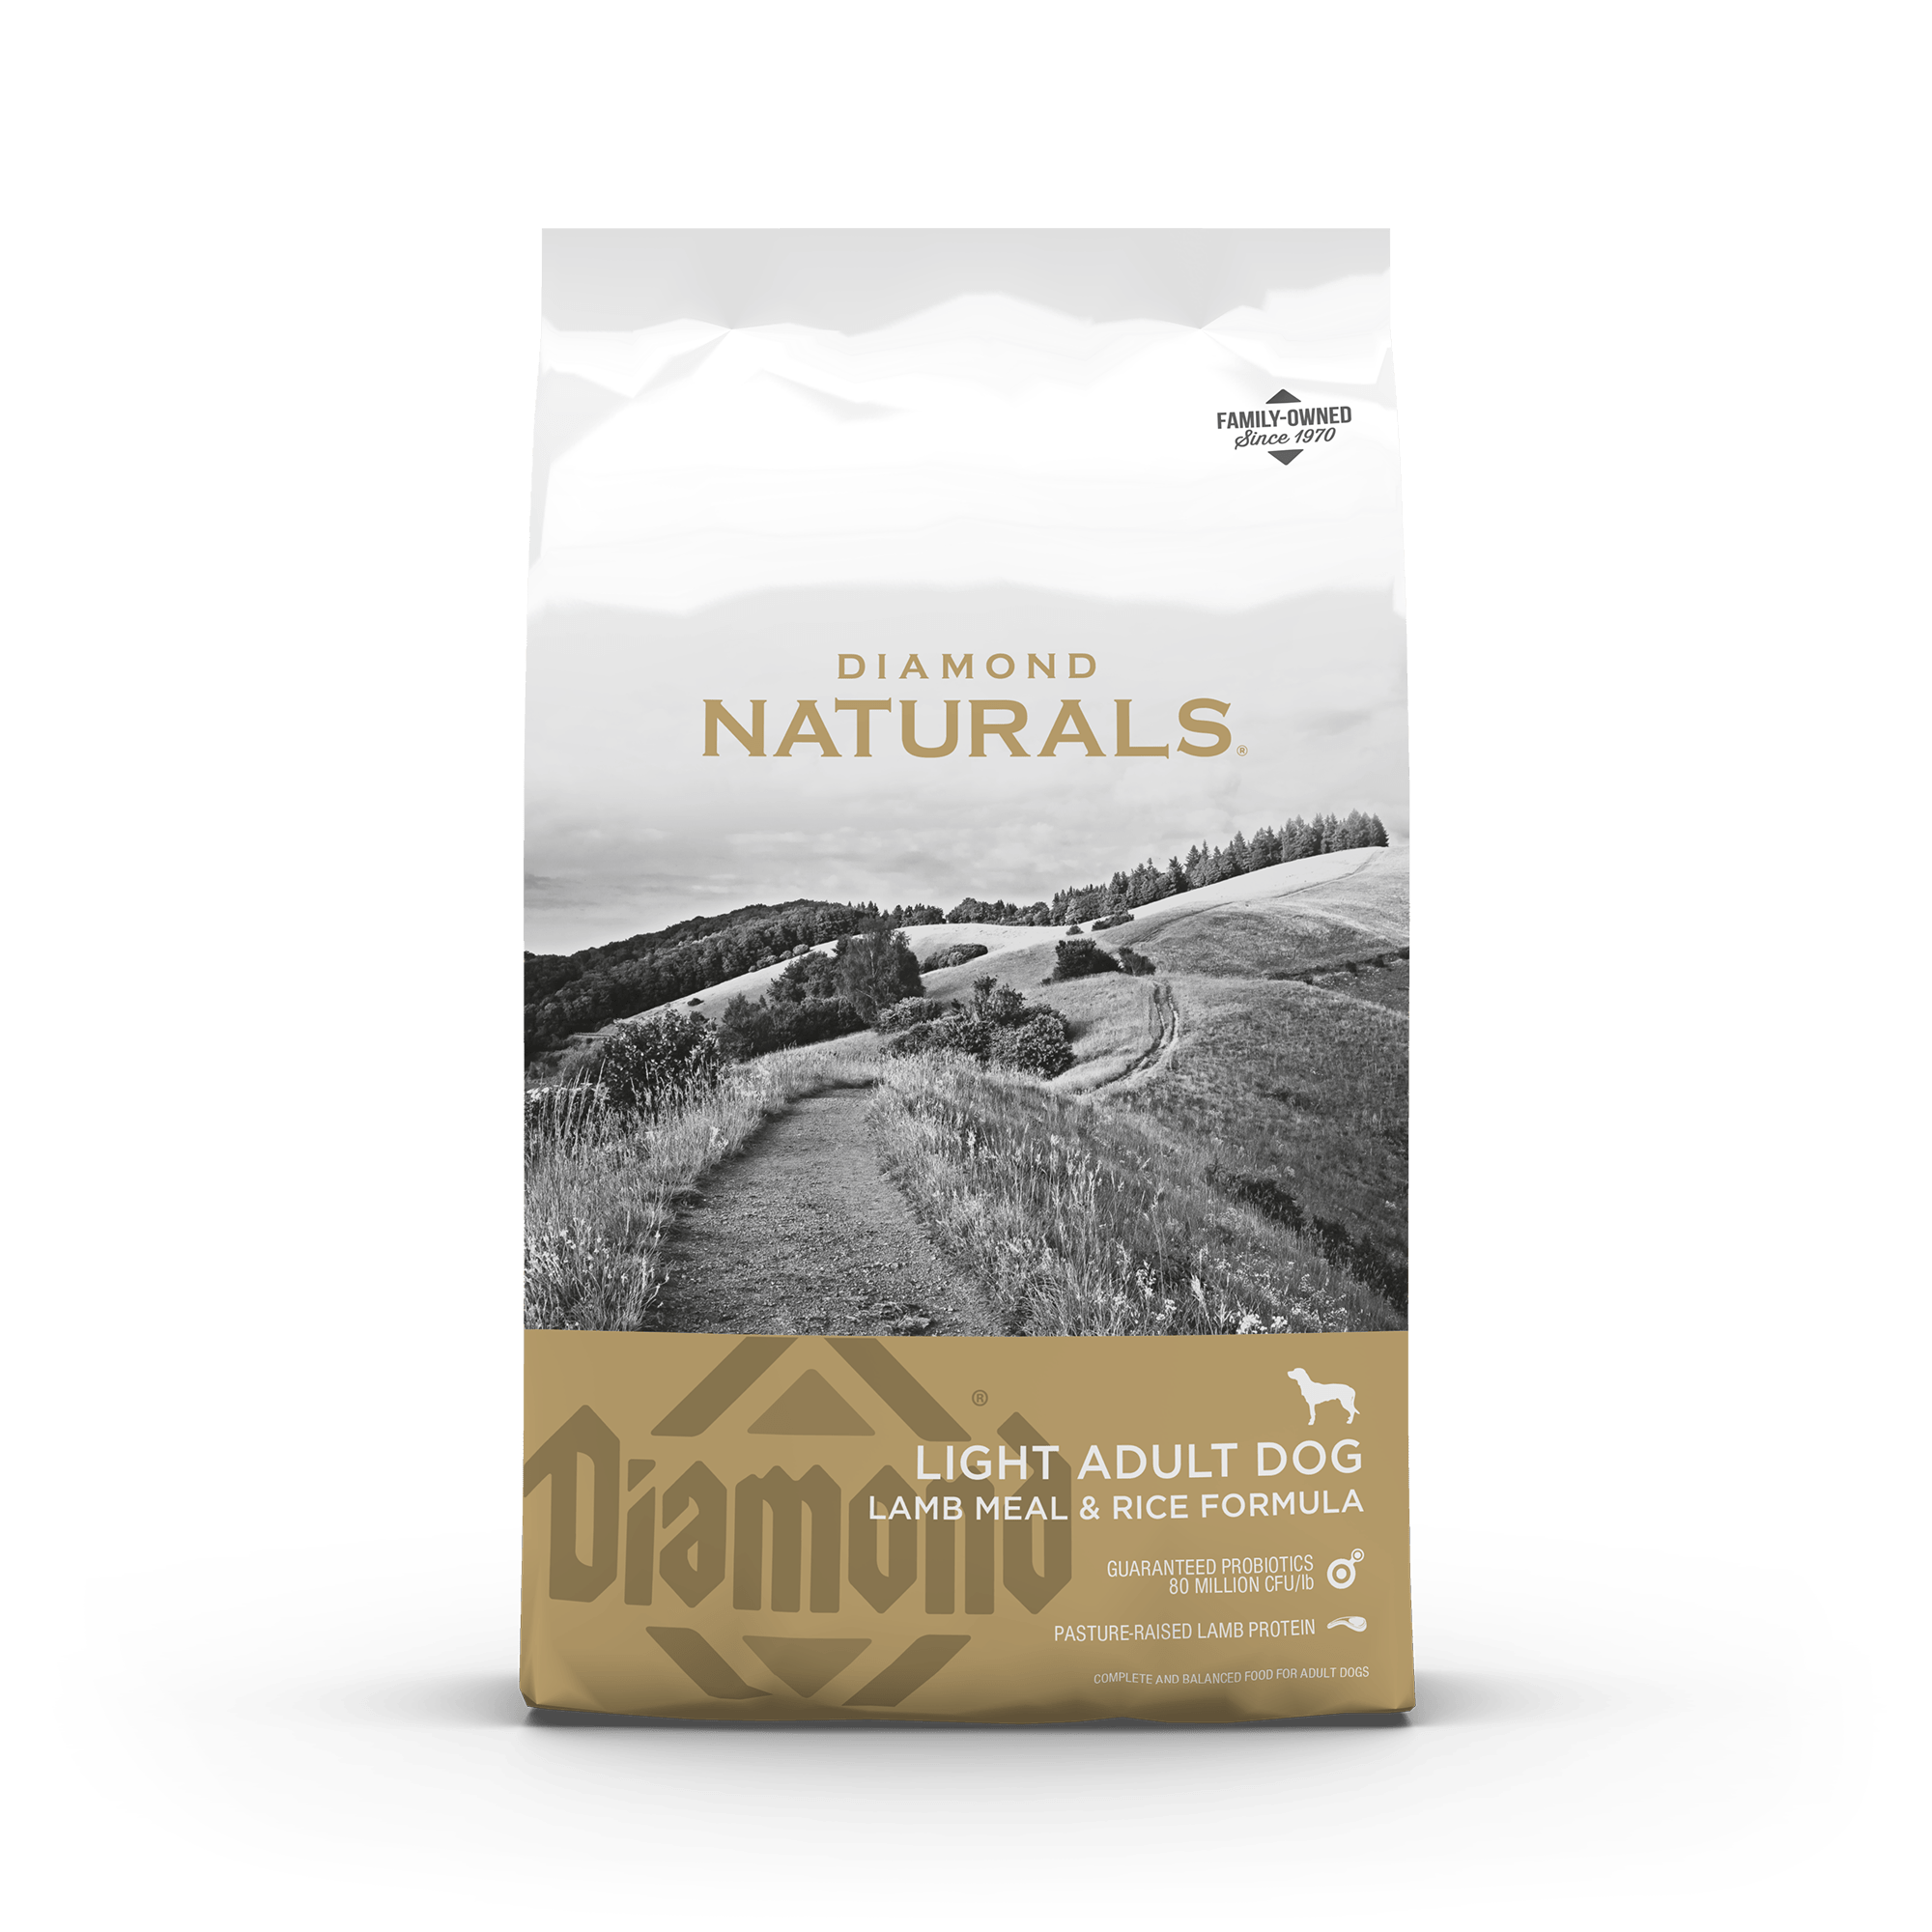 Diamond Naturals Light Adult Dog Lamb Meal & Rice Formula product packaging